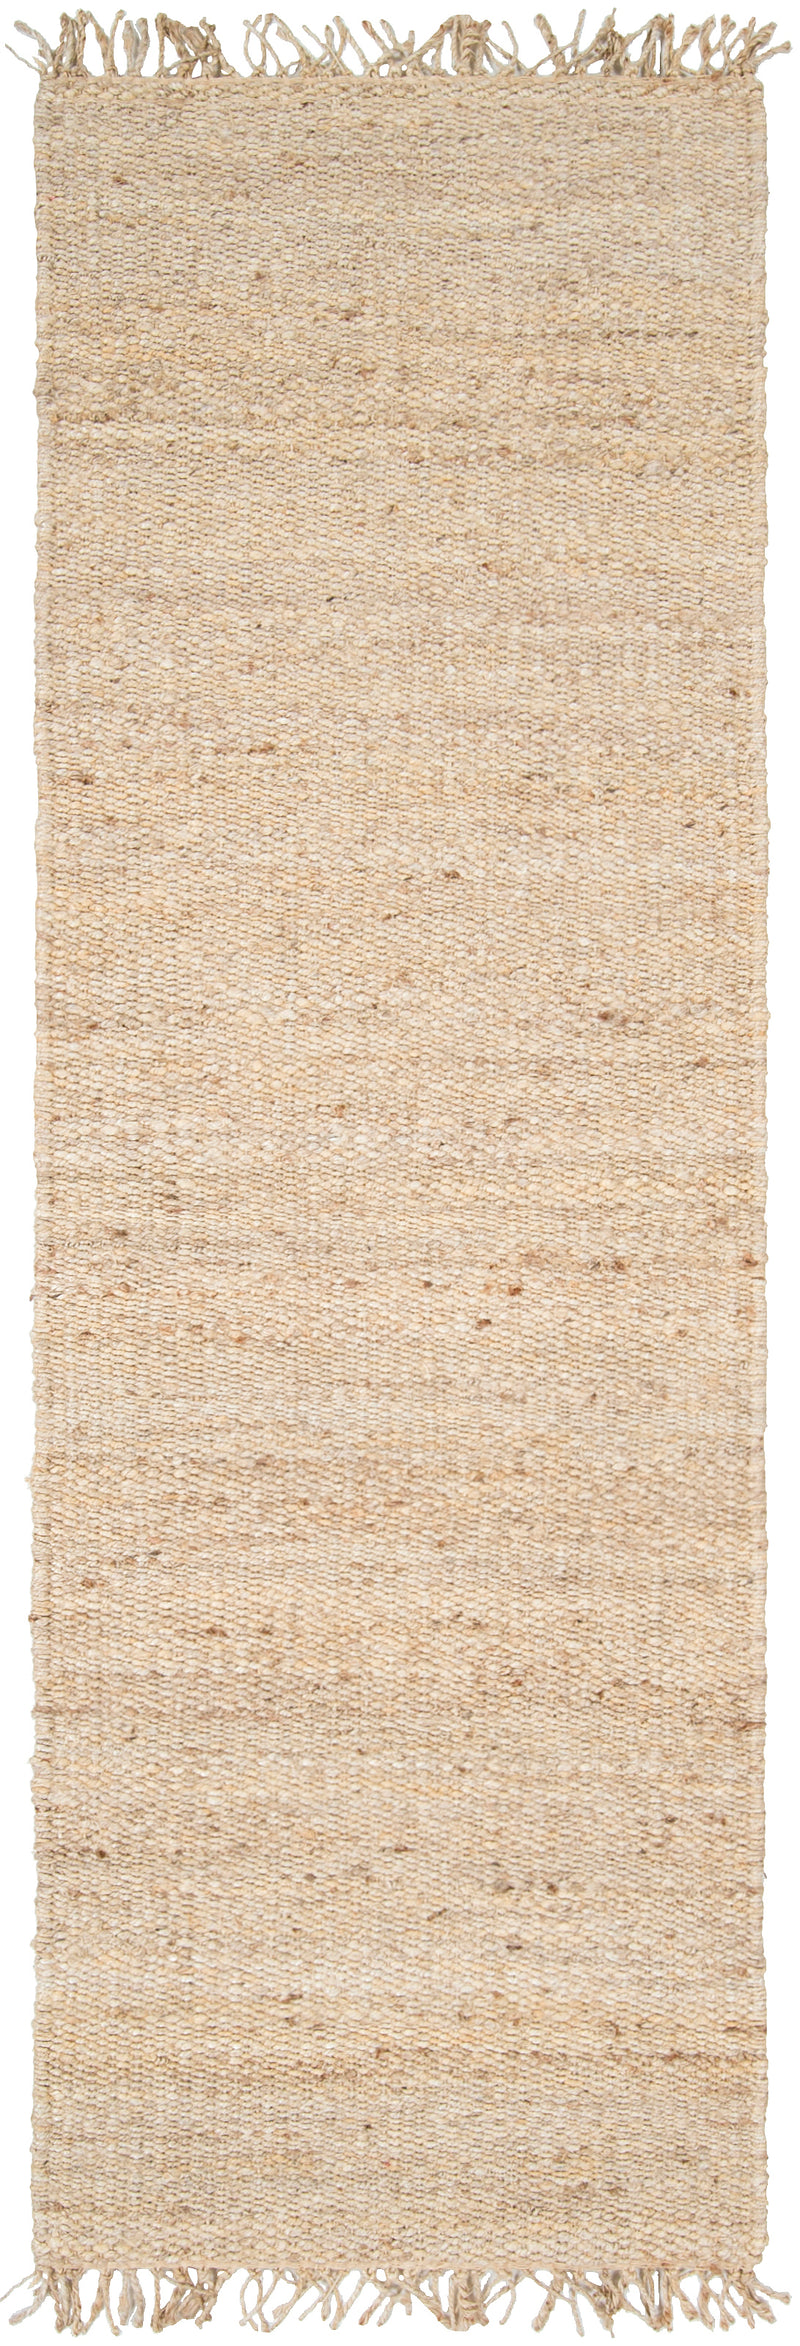 media image for jute rug design by surya 2 238